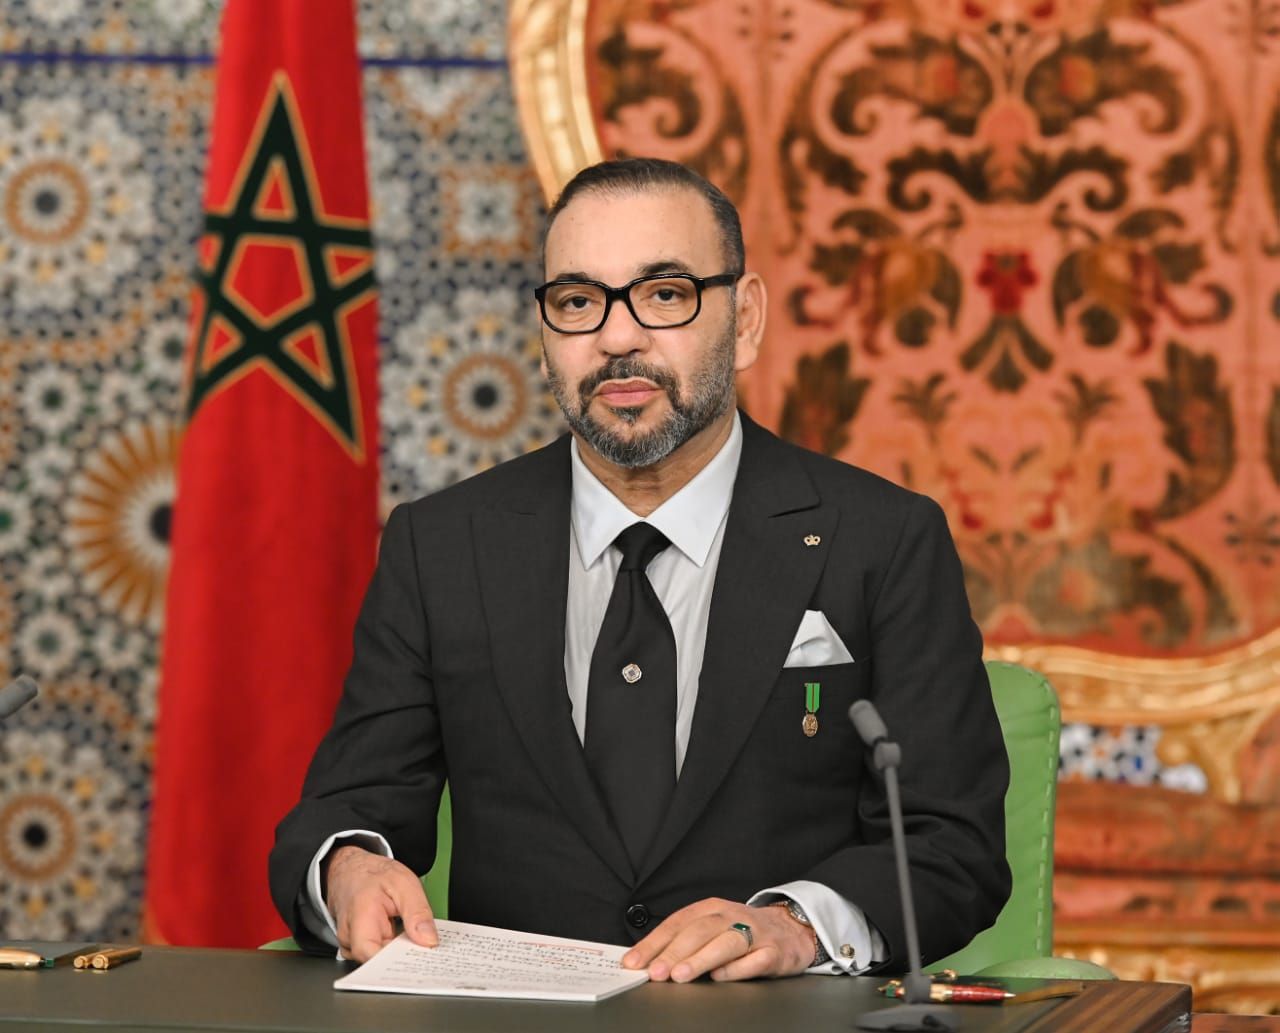 Le Roi Mohammed VI félicite le Roi Charles III à l'occasion de son intronisation